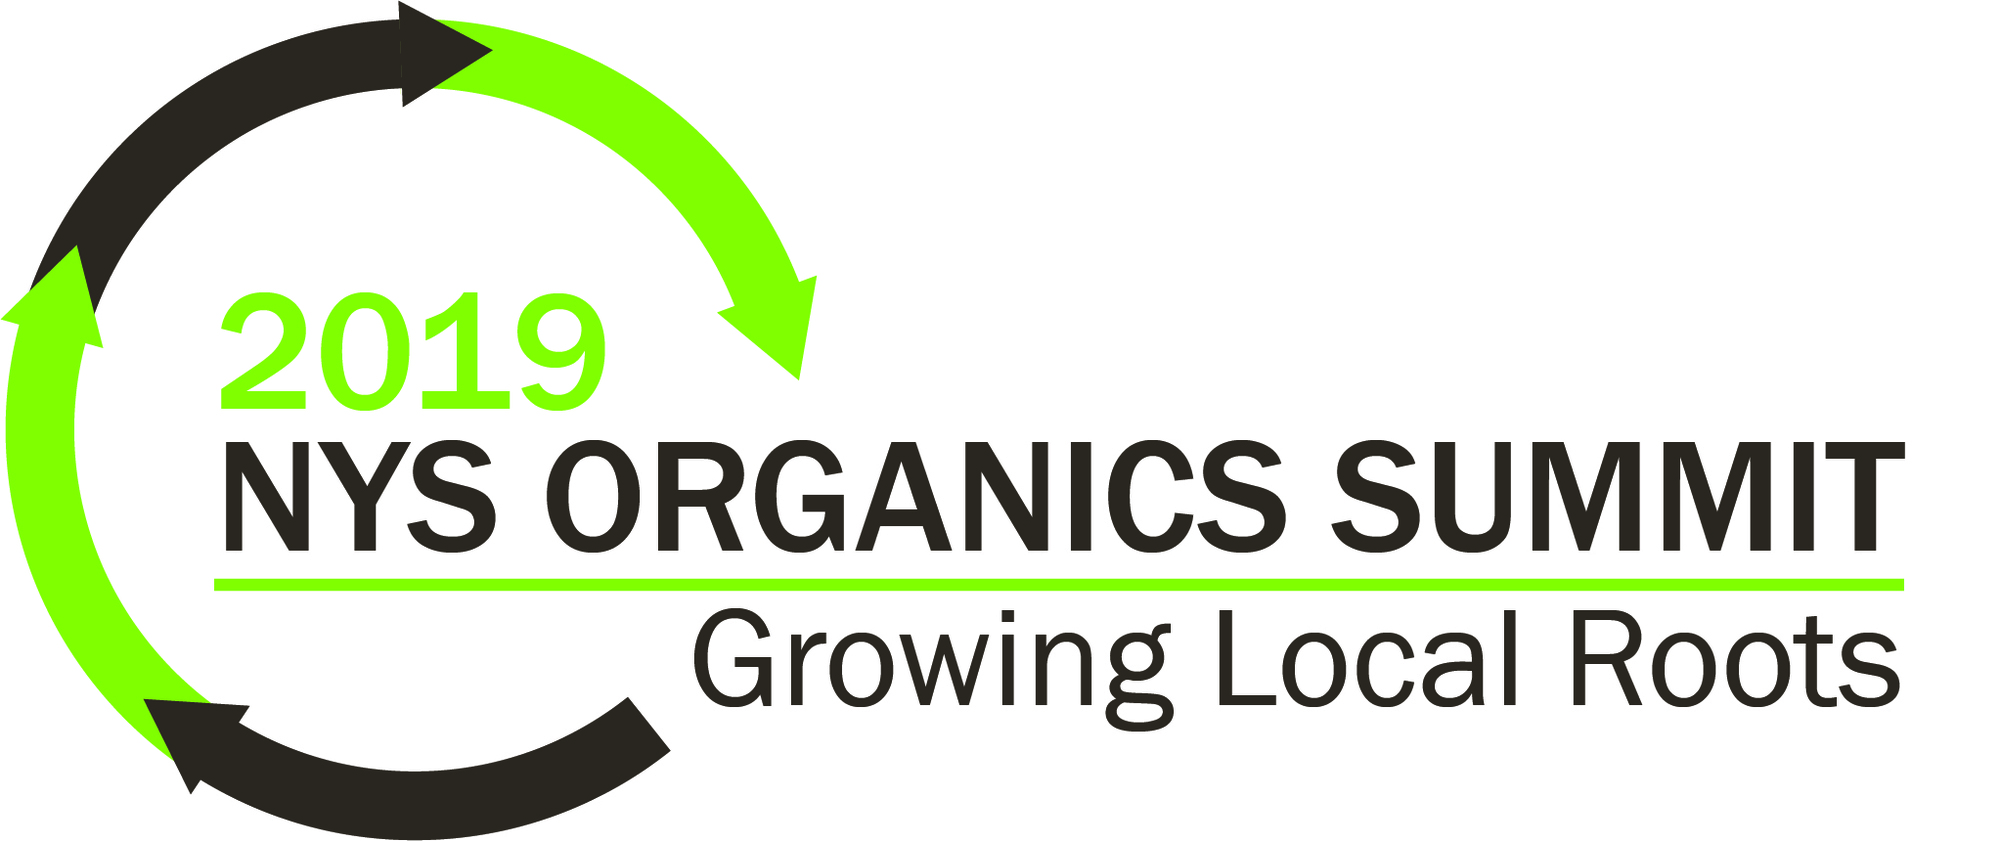 Organics Summit Logo